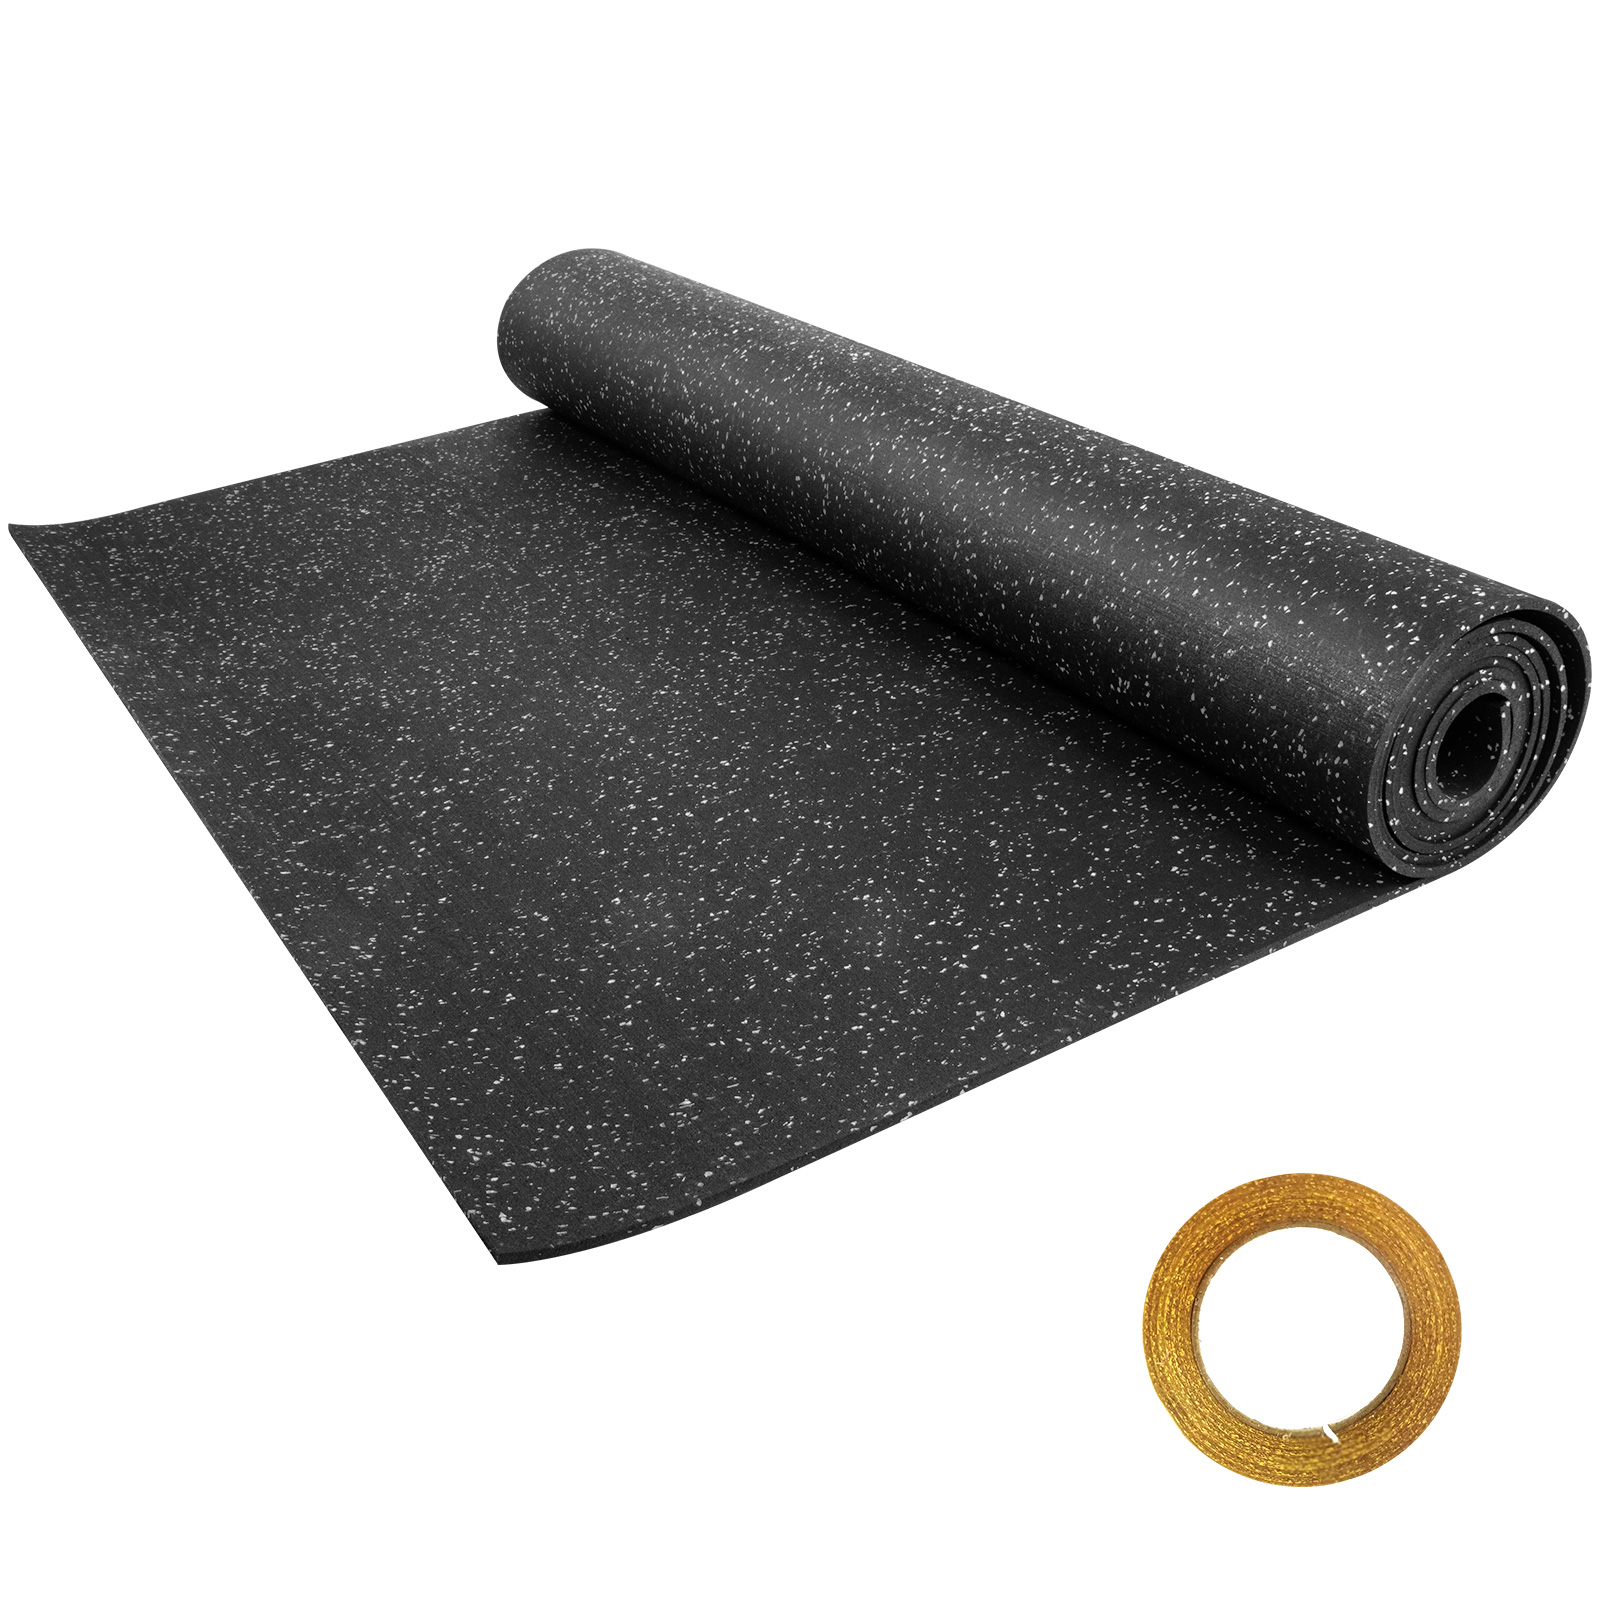 Rubber Flooring Mats Rolls 8mm 3.6'x15.3' Exercise & Gym High Density Non-slip от Vevor Many GEOs